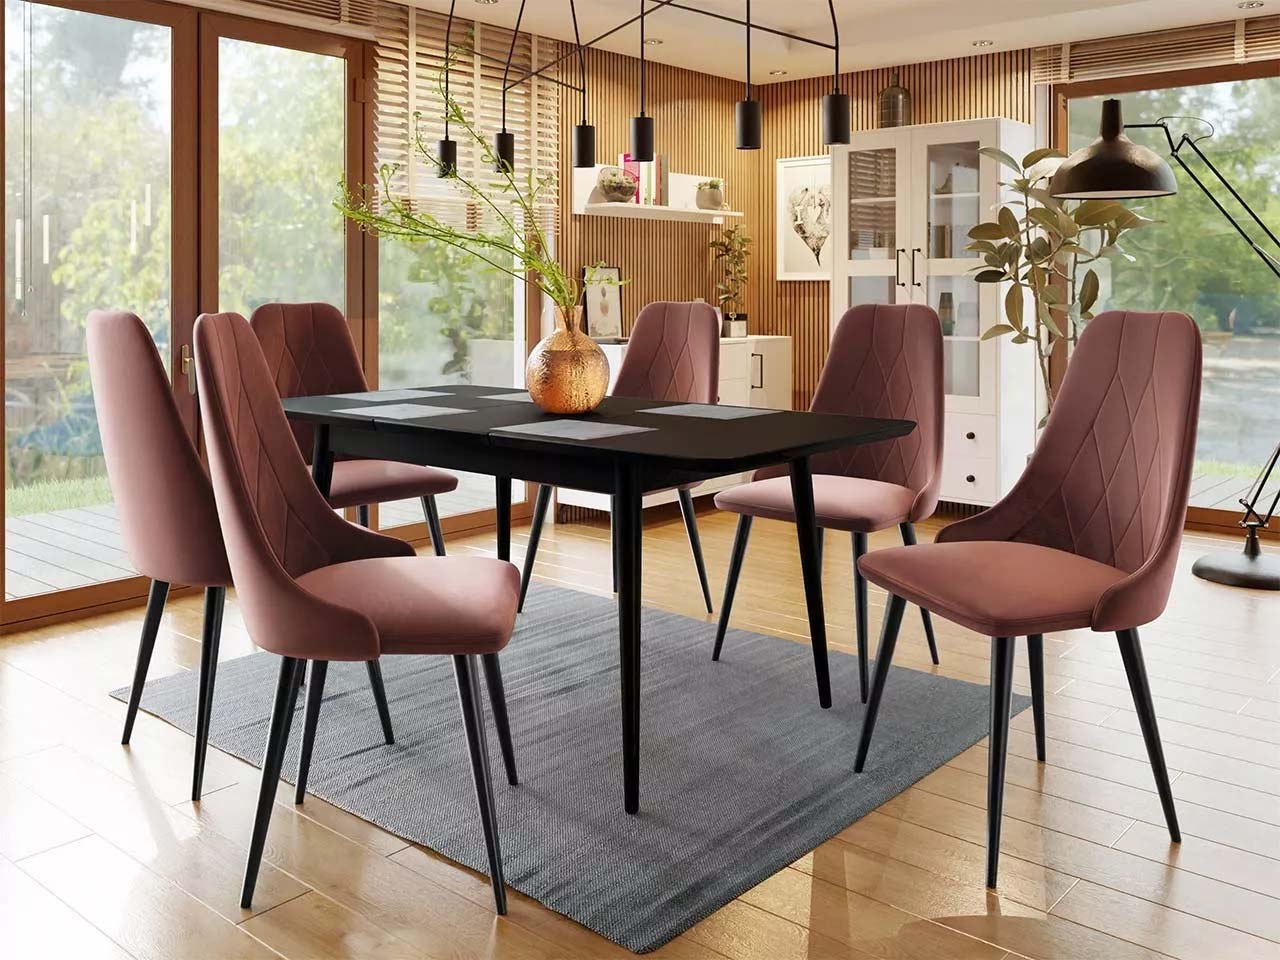 Kvalitný materiál stola a stoličiek znamená záruku pohodlného posedenia